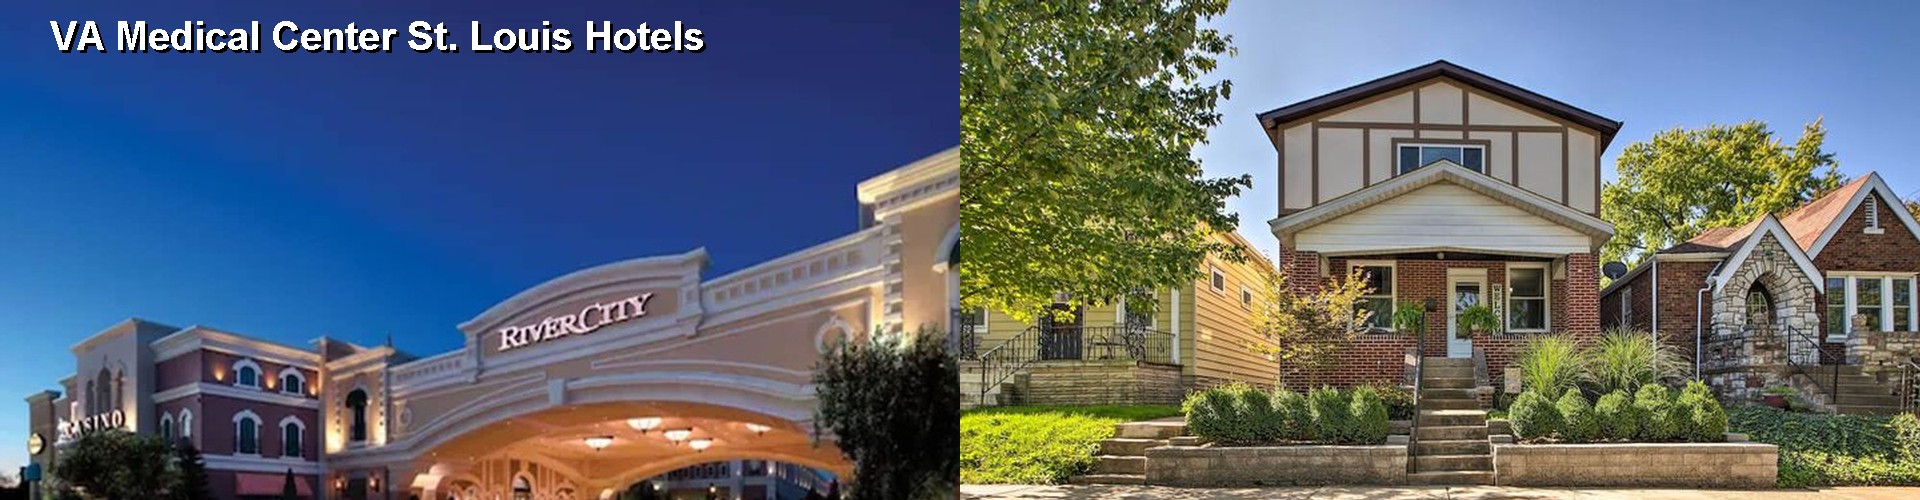 3 Best Hotels near VA Medical Center St. Louis